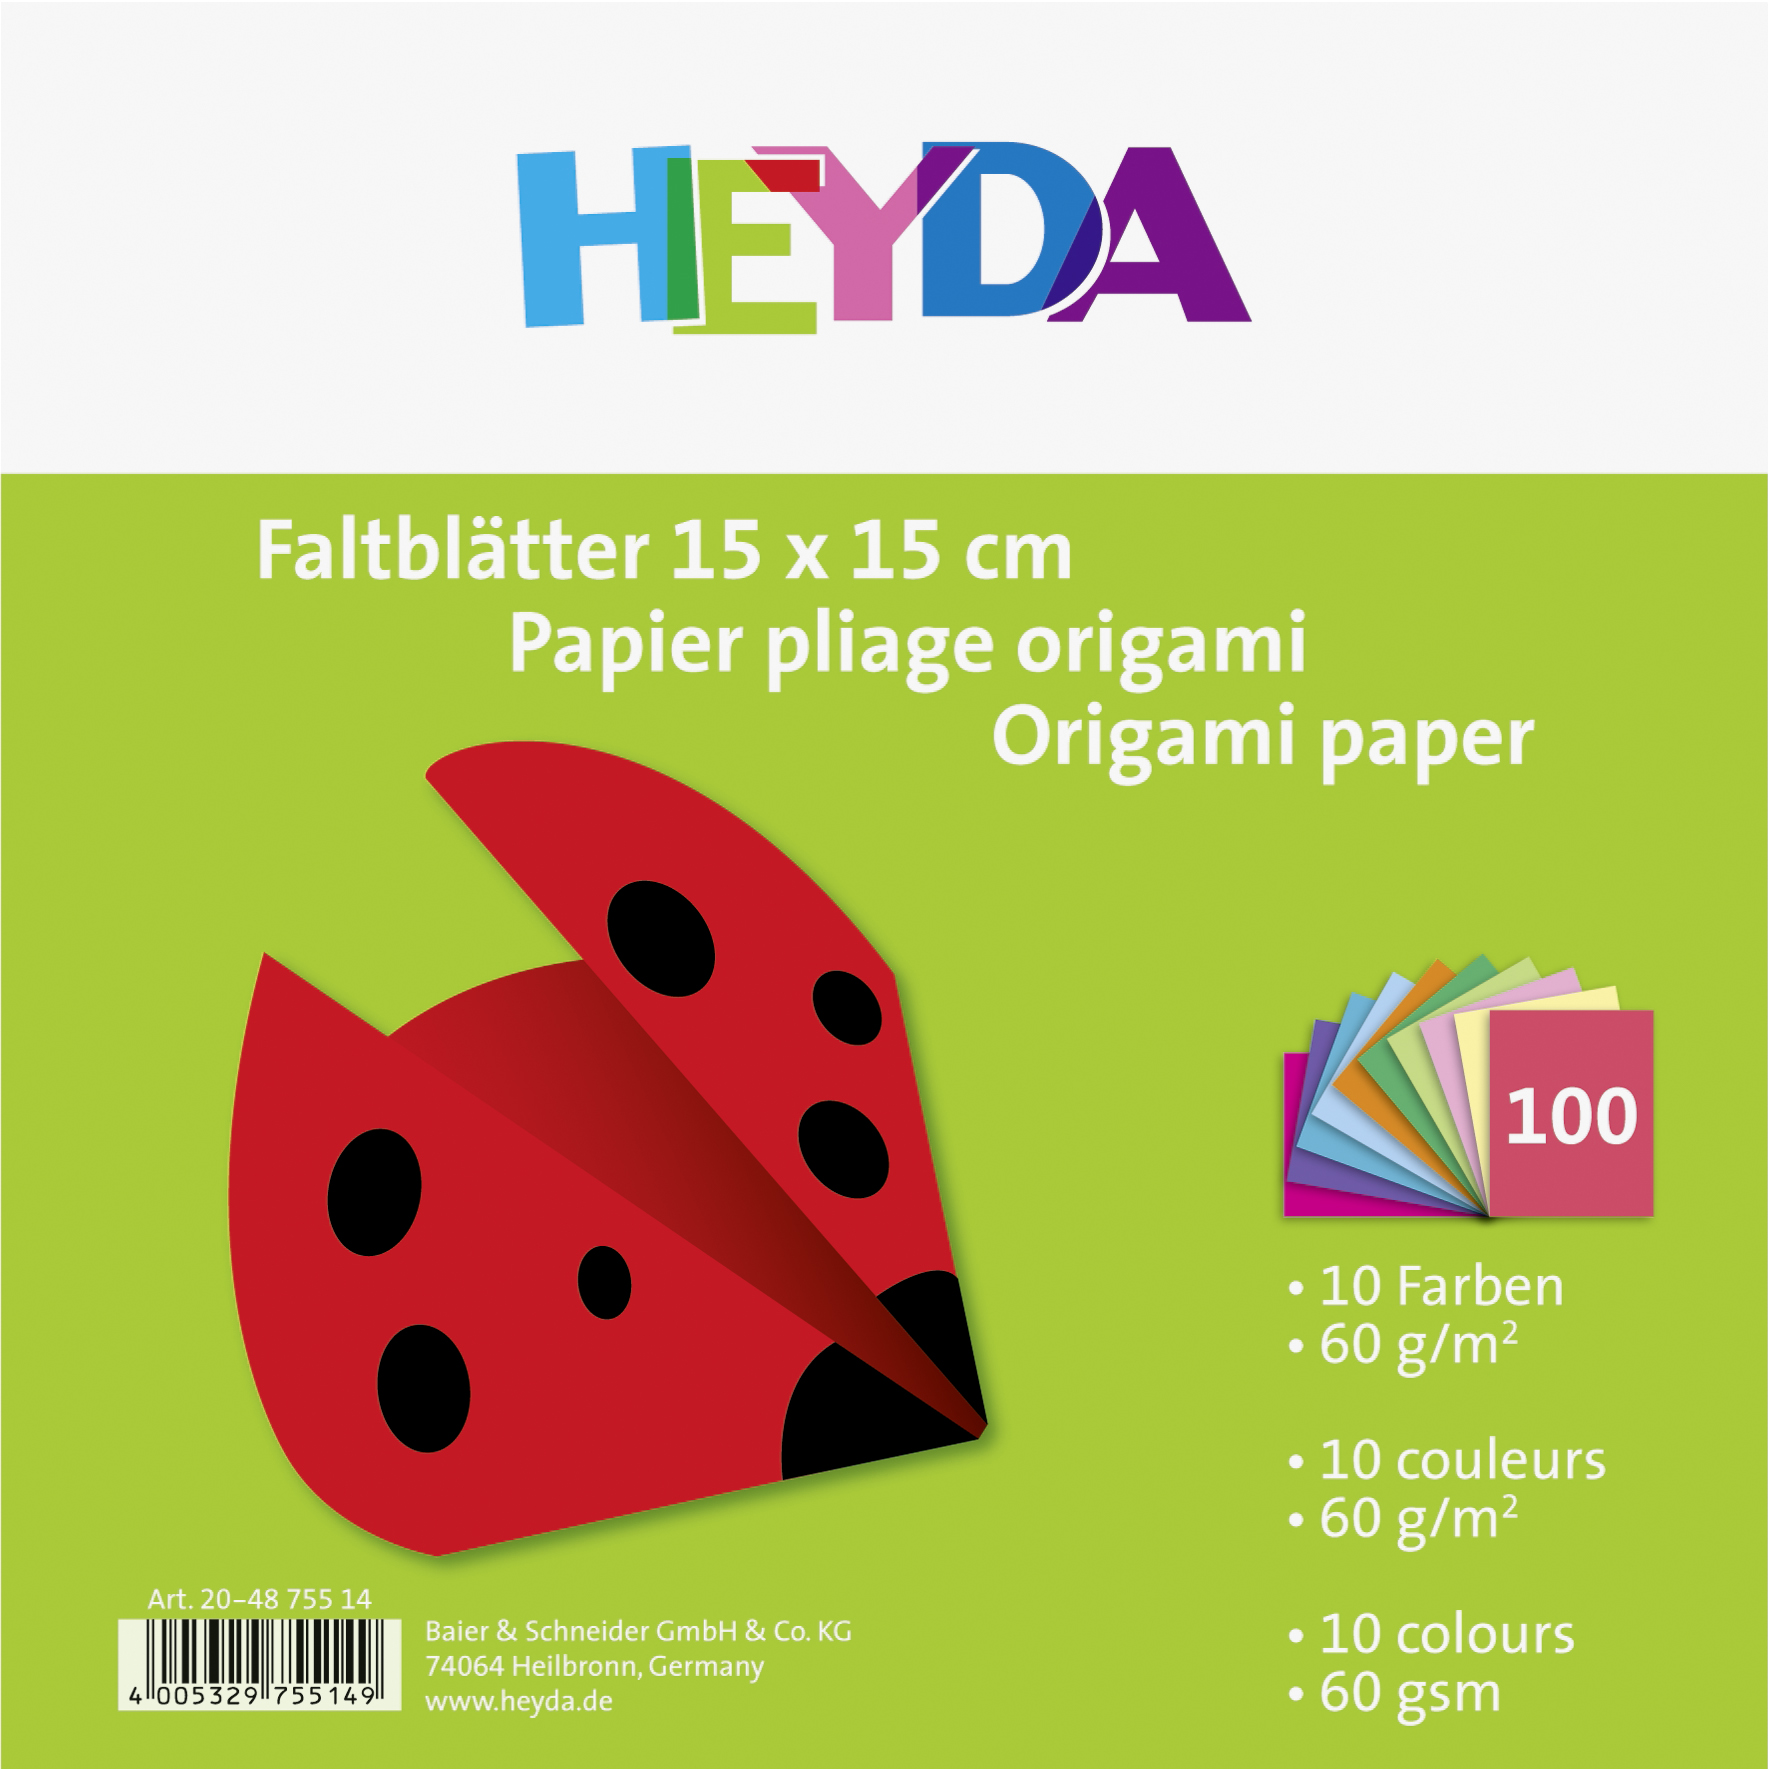 Heyda Faltblätter, 60 g, 10 Farben